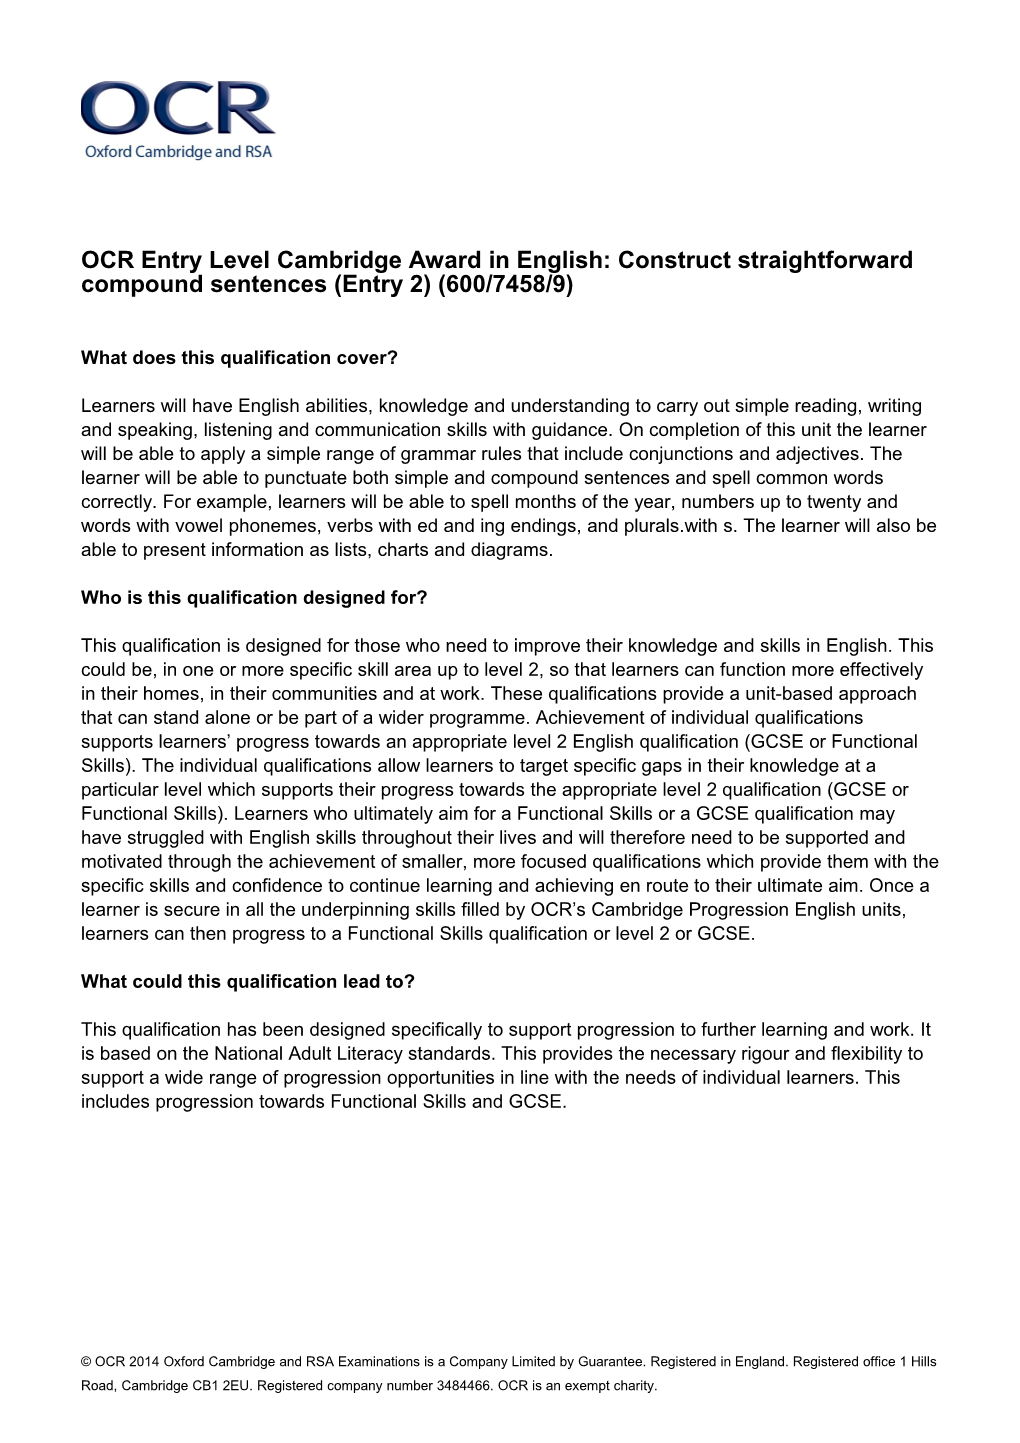 OCR Entry Level Cambridge Award in English: Construct Straightforward Compound Sentences